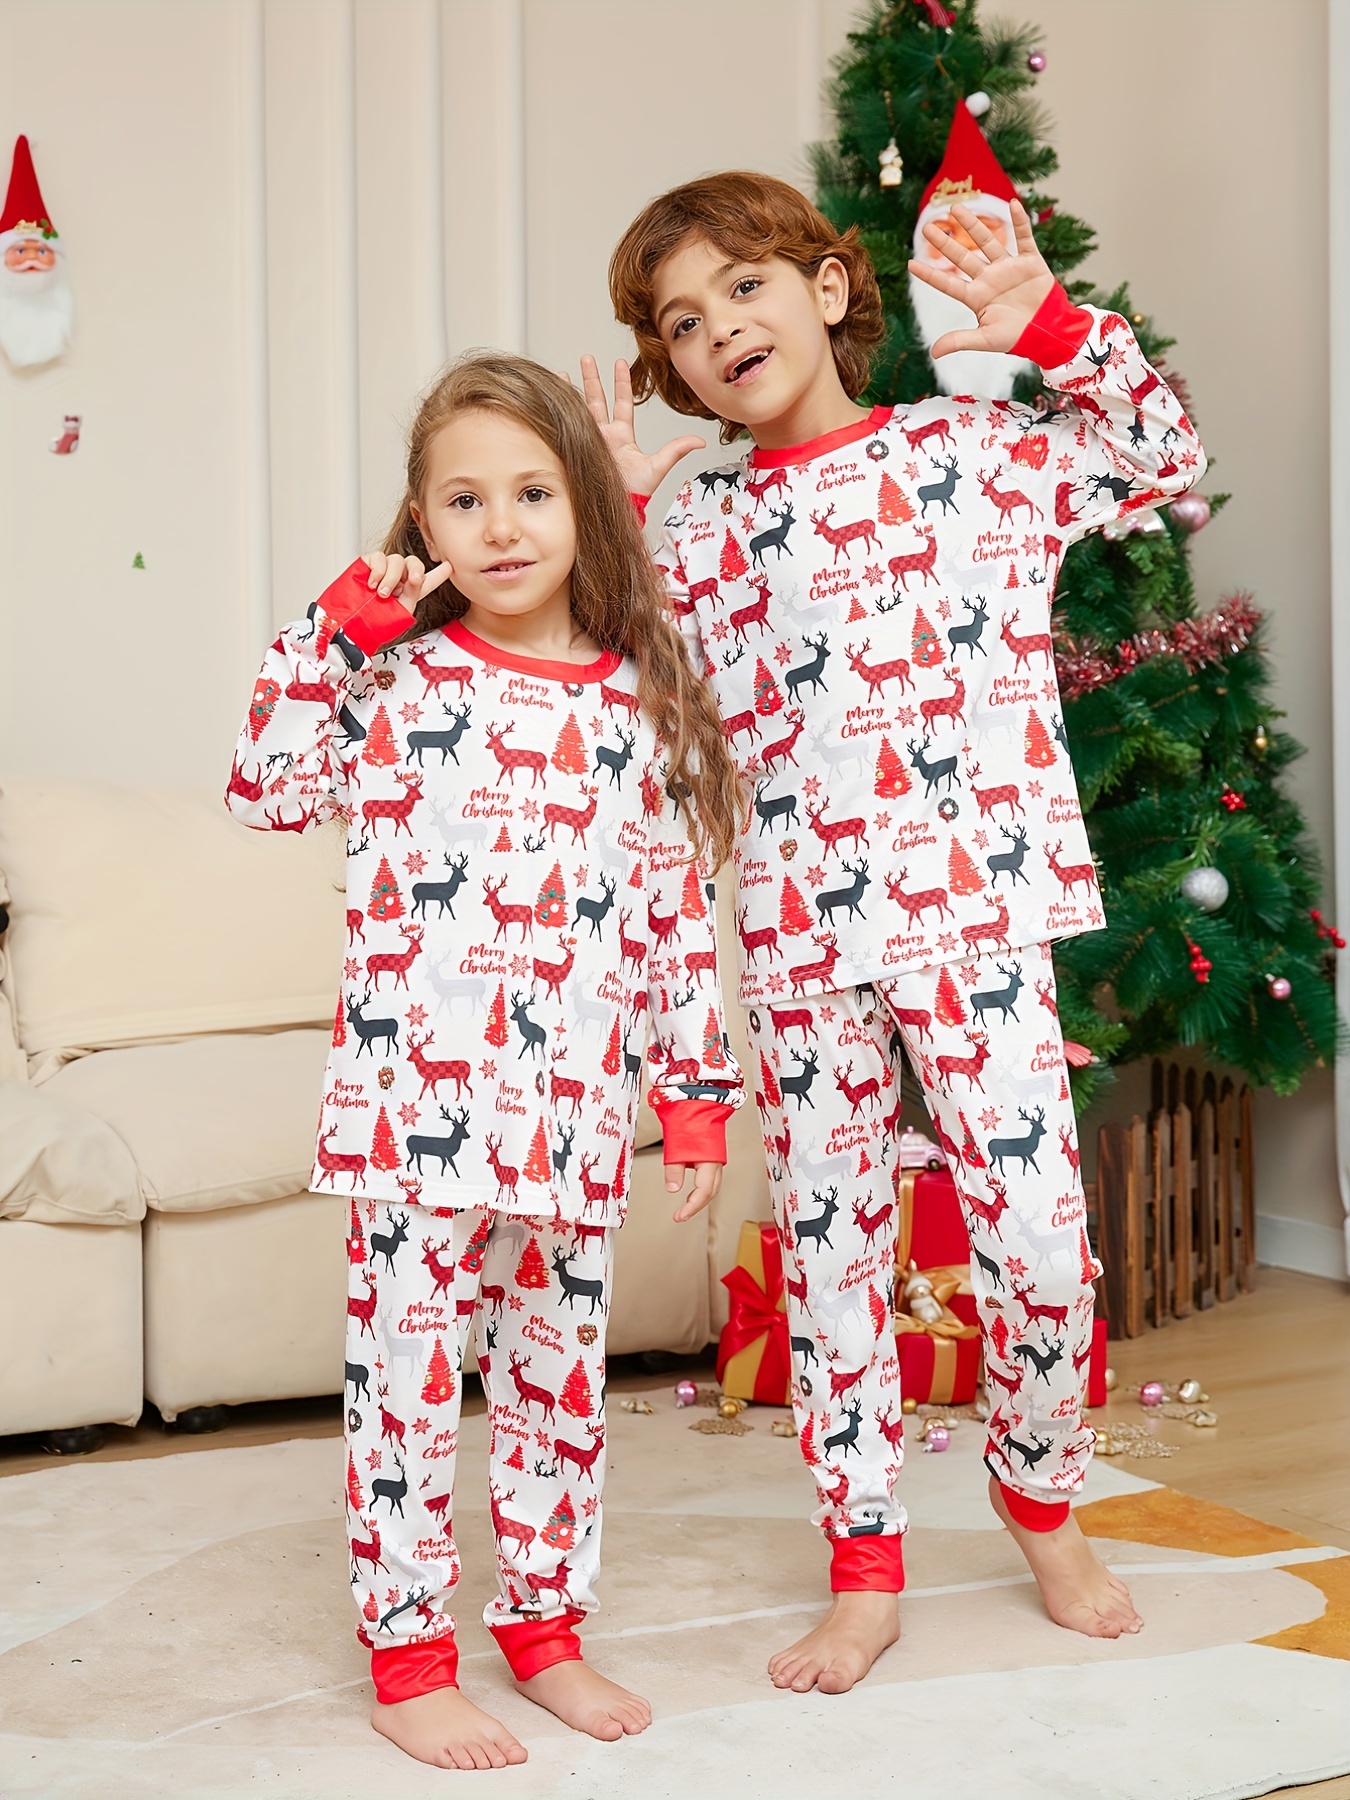 HAWEE Matching Christmas Family Pajamas Sets, Xmas Elk Reindeer Print  Family Christmas Pjs Matching Sets Sleepwear Outfits